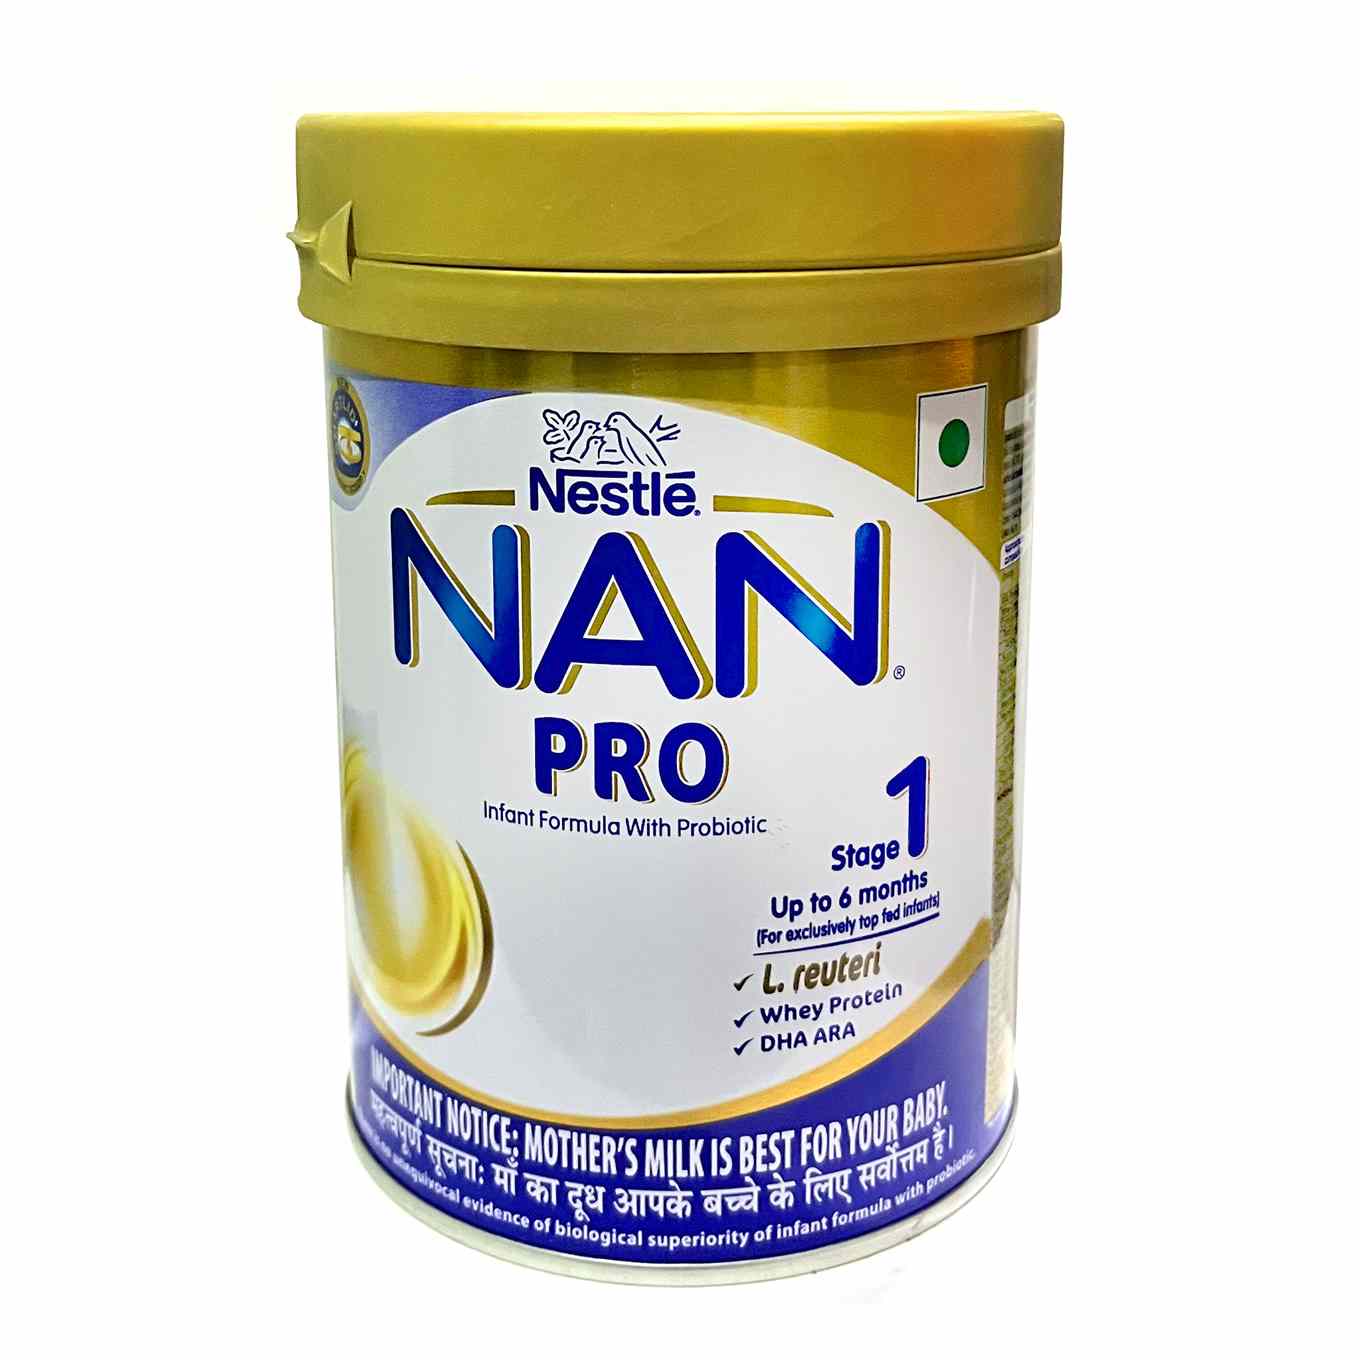 Buy Nestle Nan Pro Infant Baby Milk Powder Formula, Stage 1 - 400gms Online in India at uyyaala.com